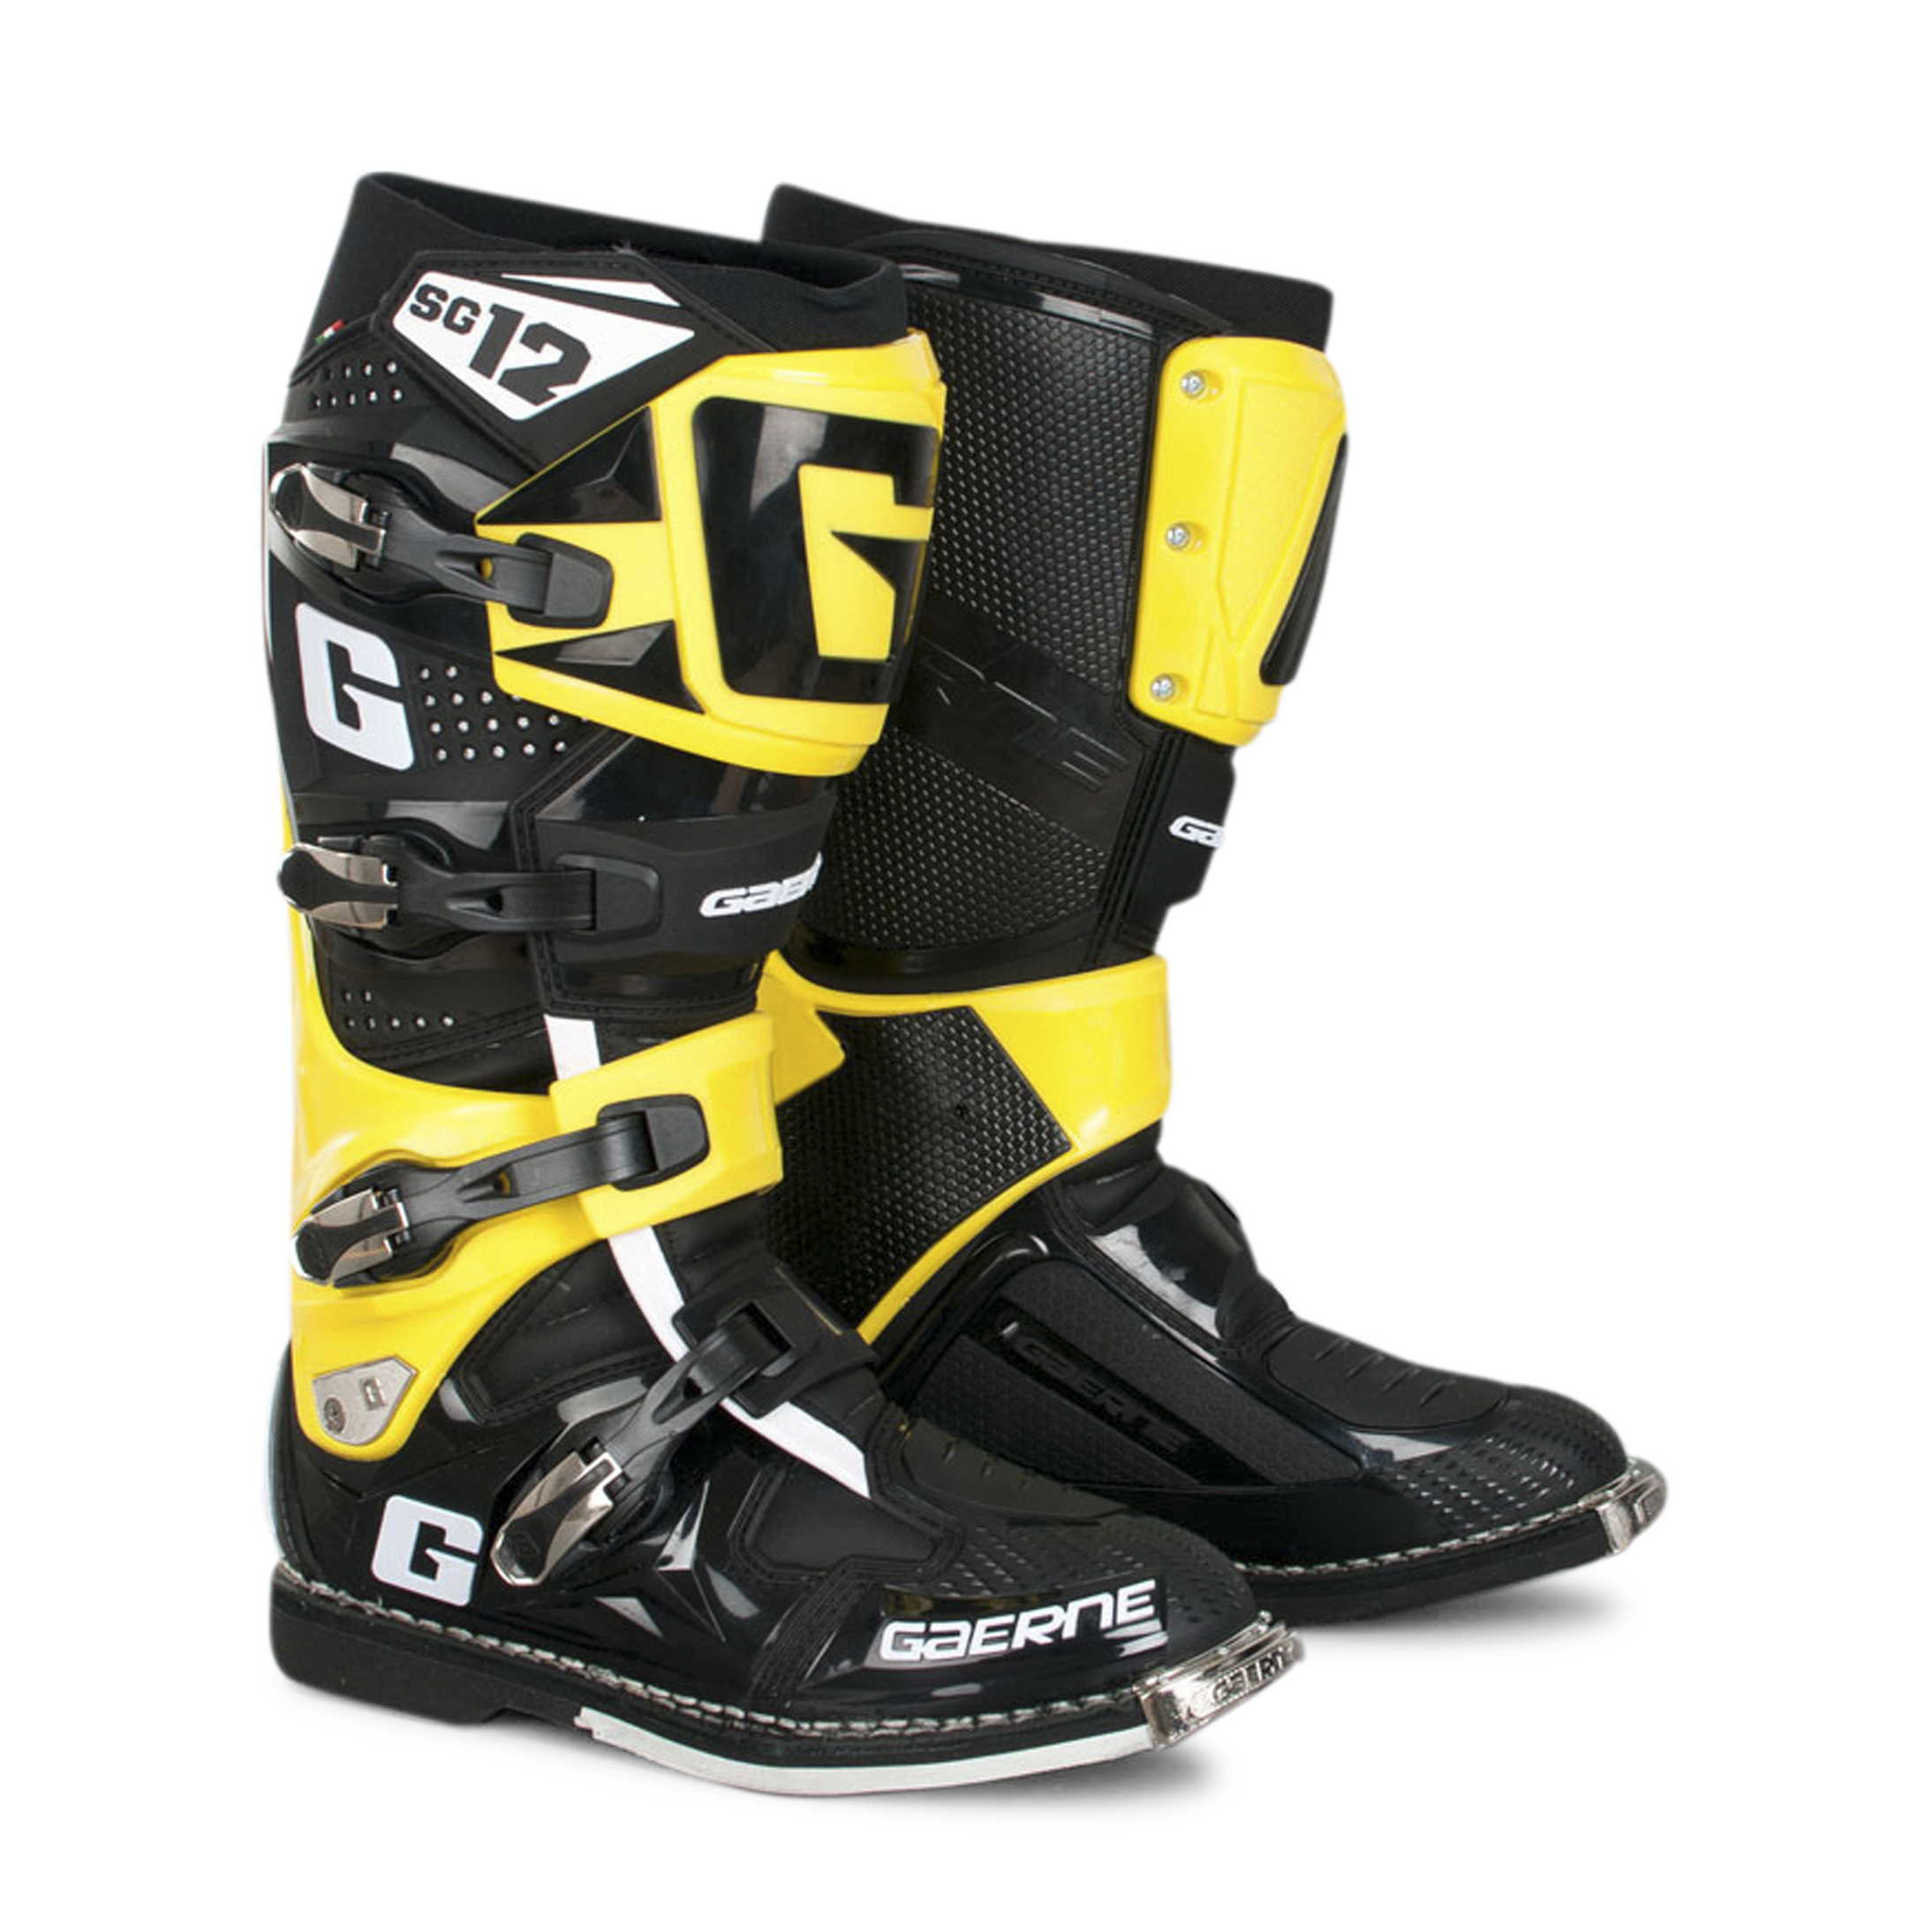 Gaerne SG-12 Ltd. Boots Yellow-Black 